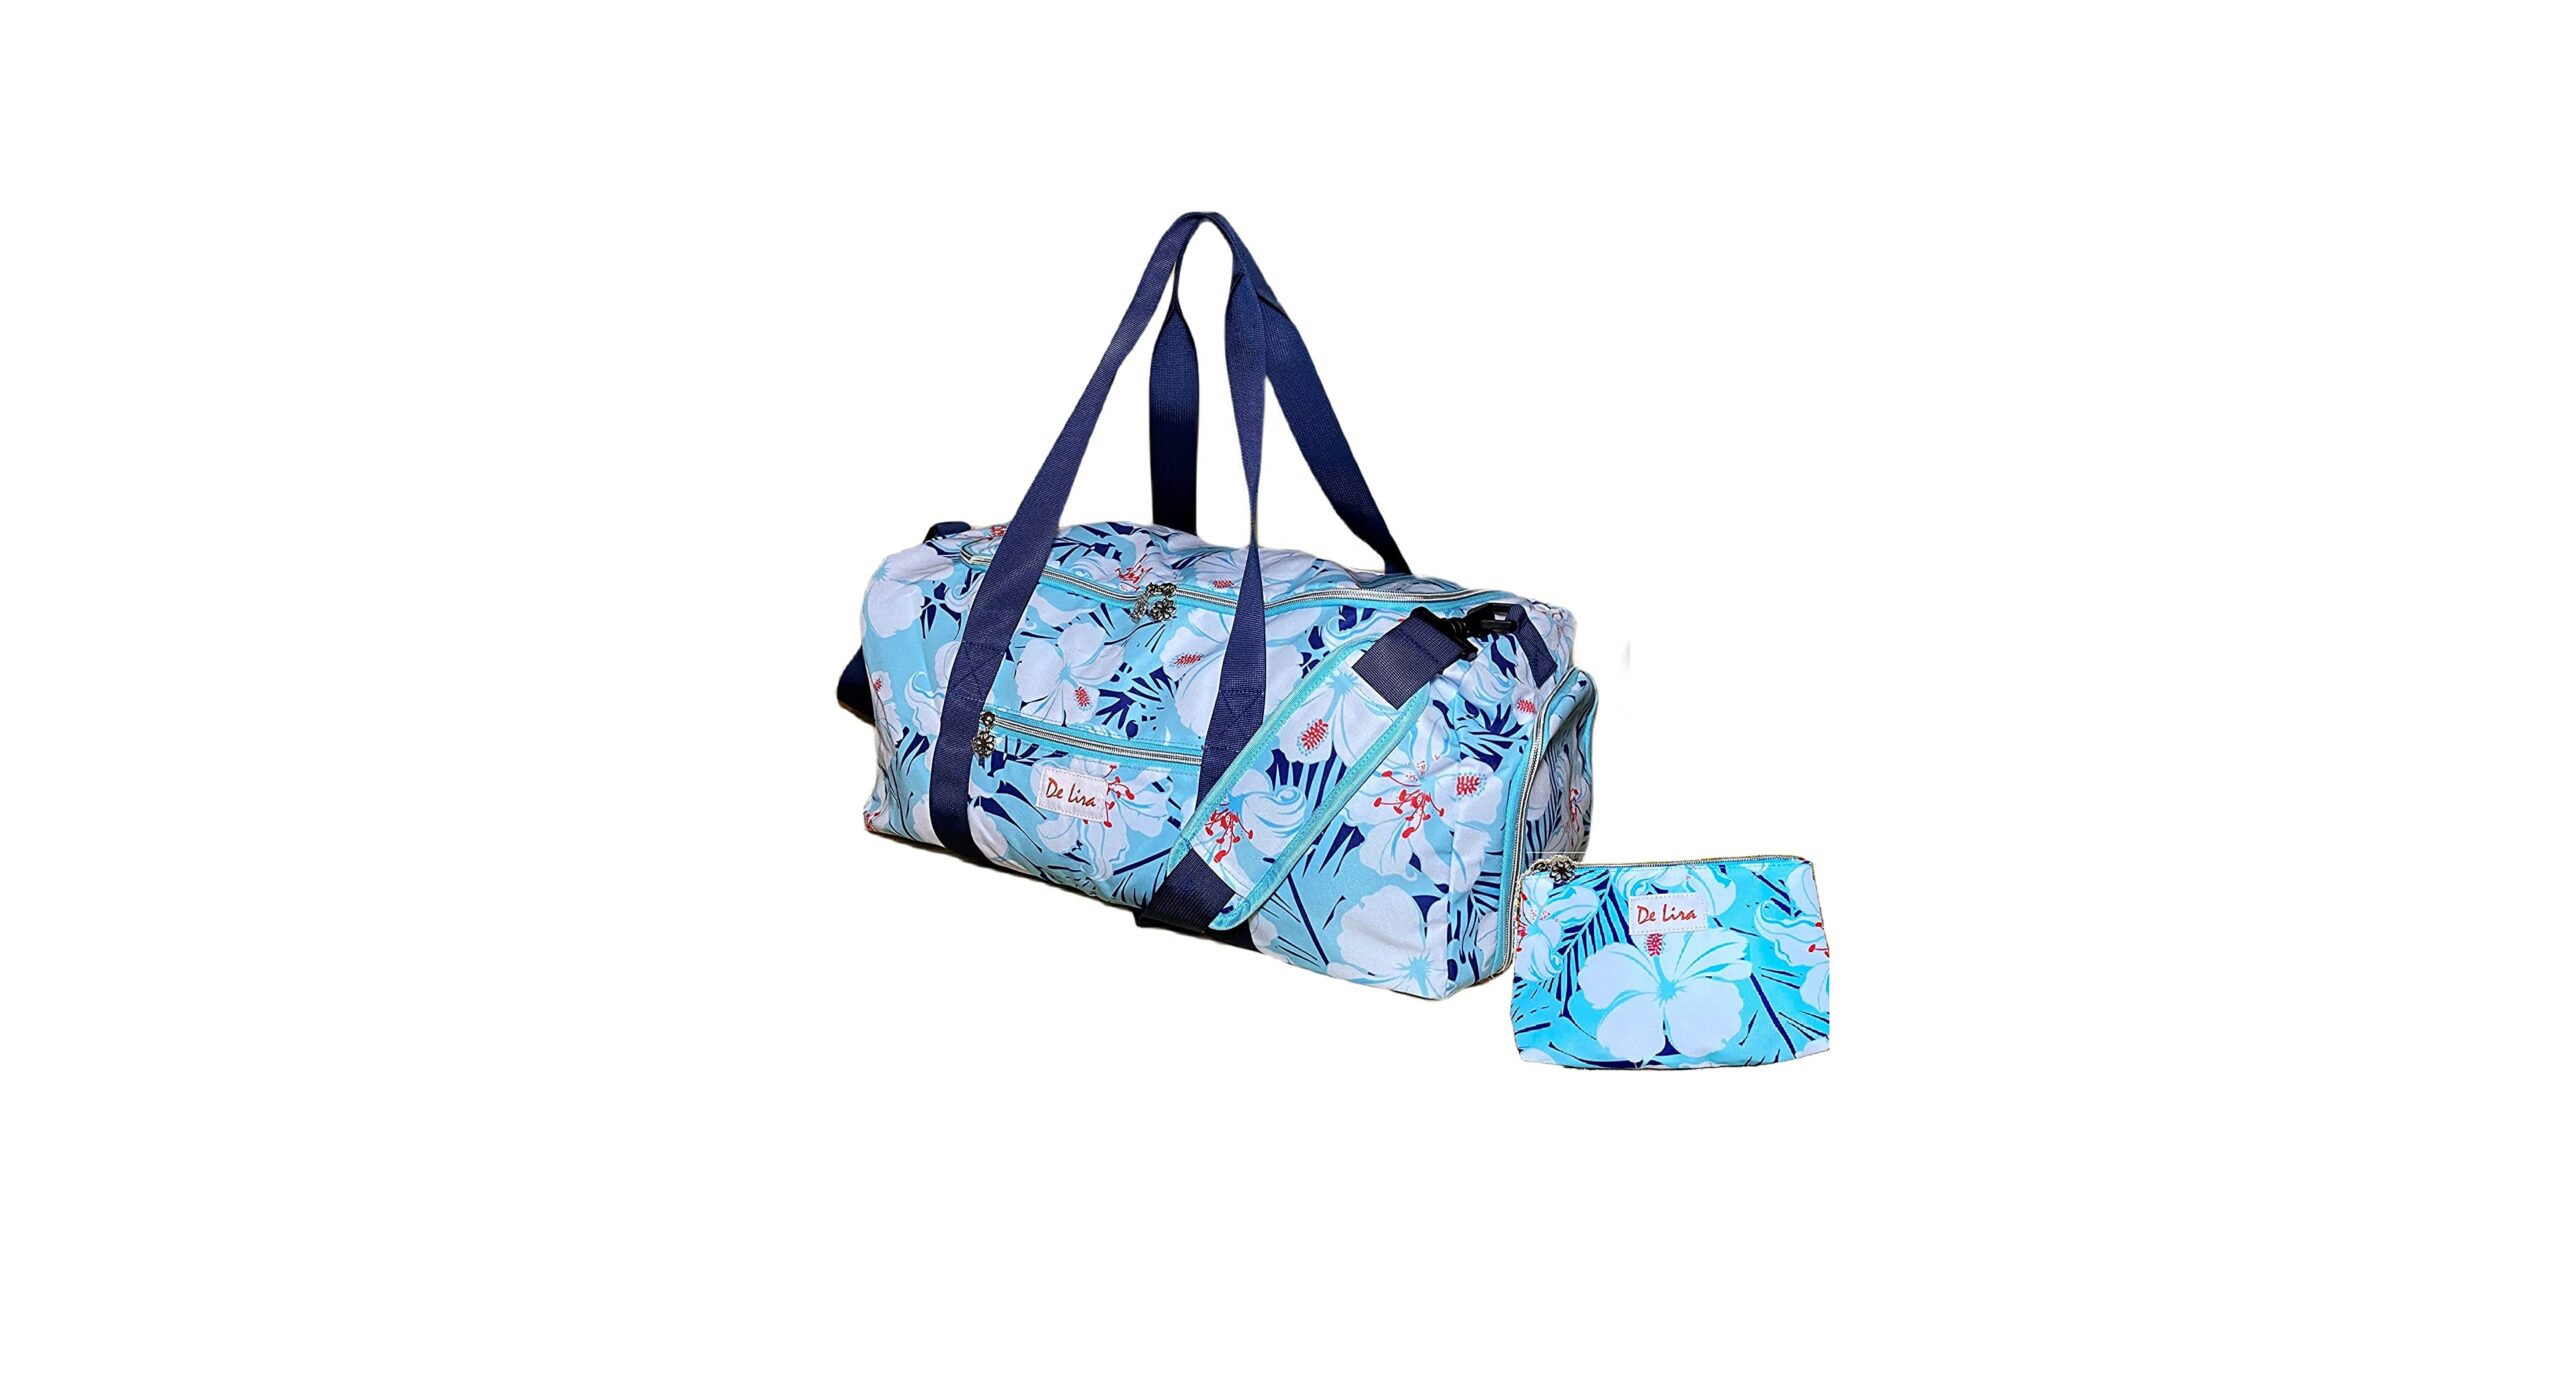 Business Trip Short-Distance Luggage Bag Travel Bag Men and Women Light  Yoga Bag Gym Bag Large Capacity Portable Pending Delivery Buggy Bag